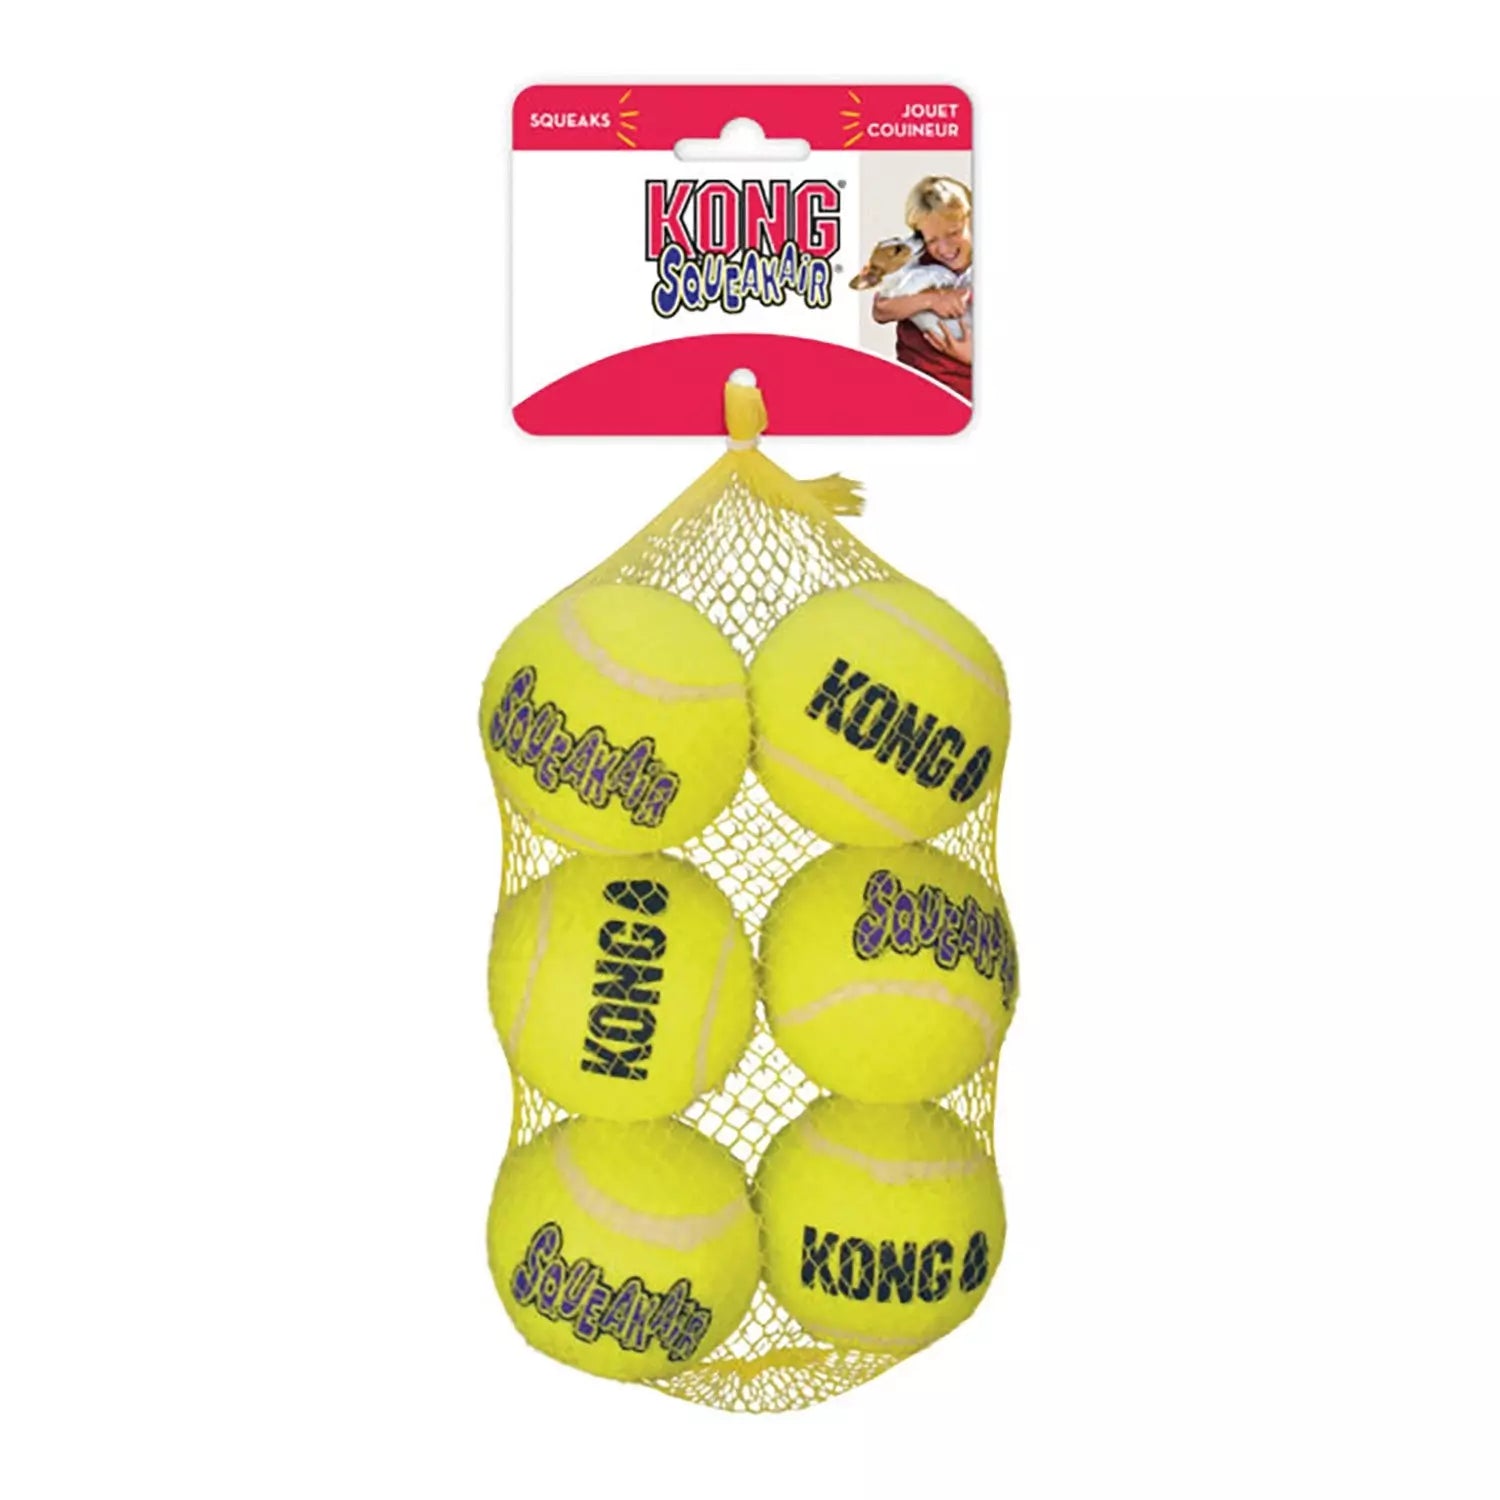 Kong SqueakAir Balls Dog Toy 6 Pack, Medium